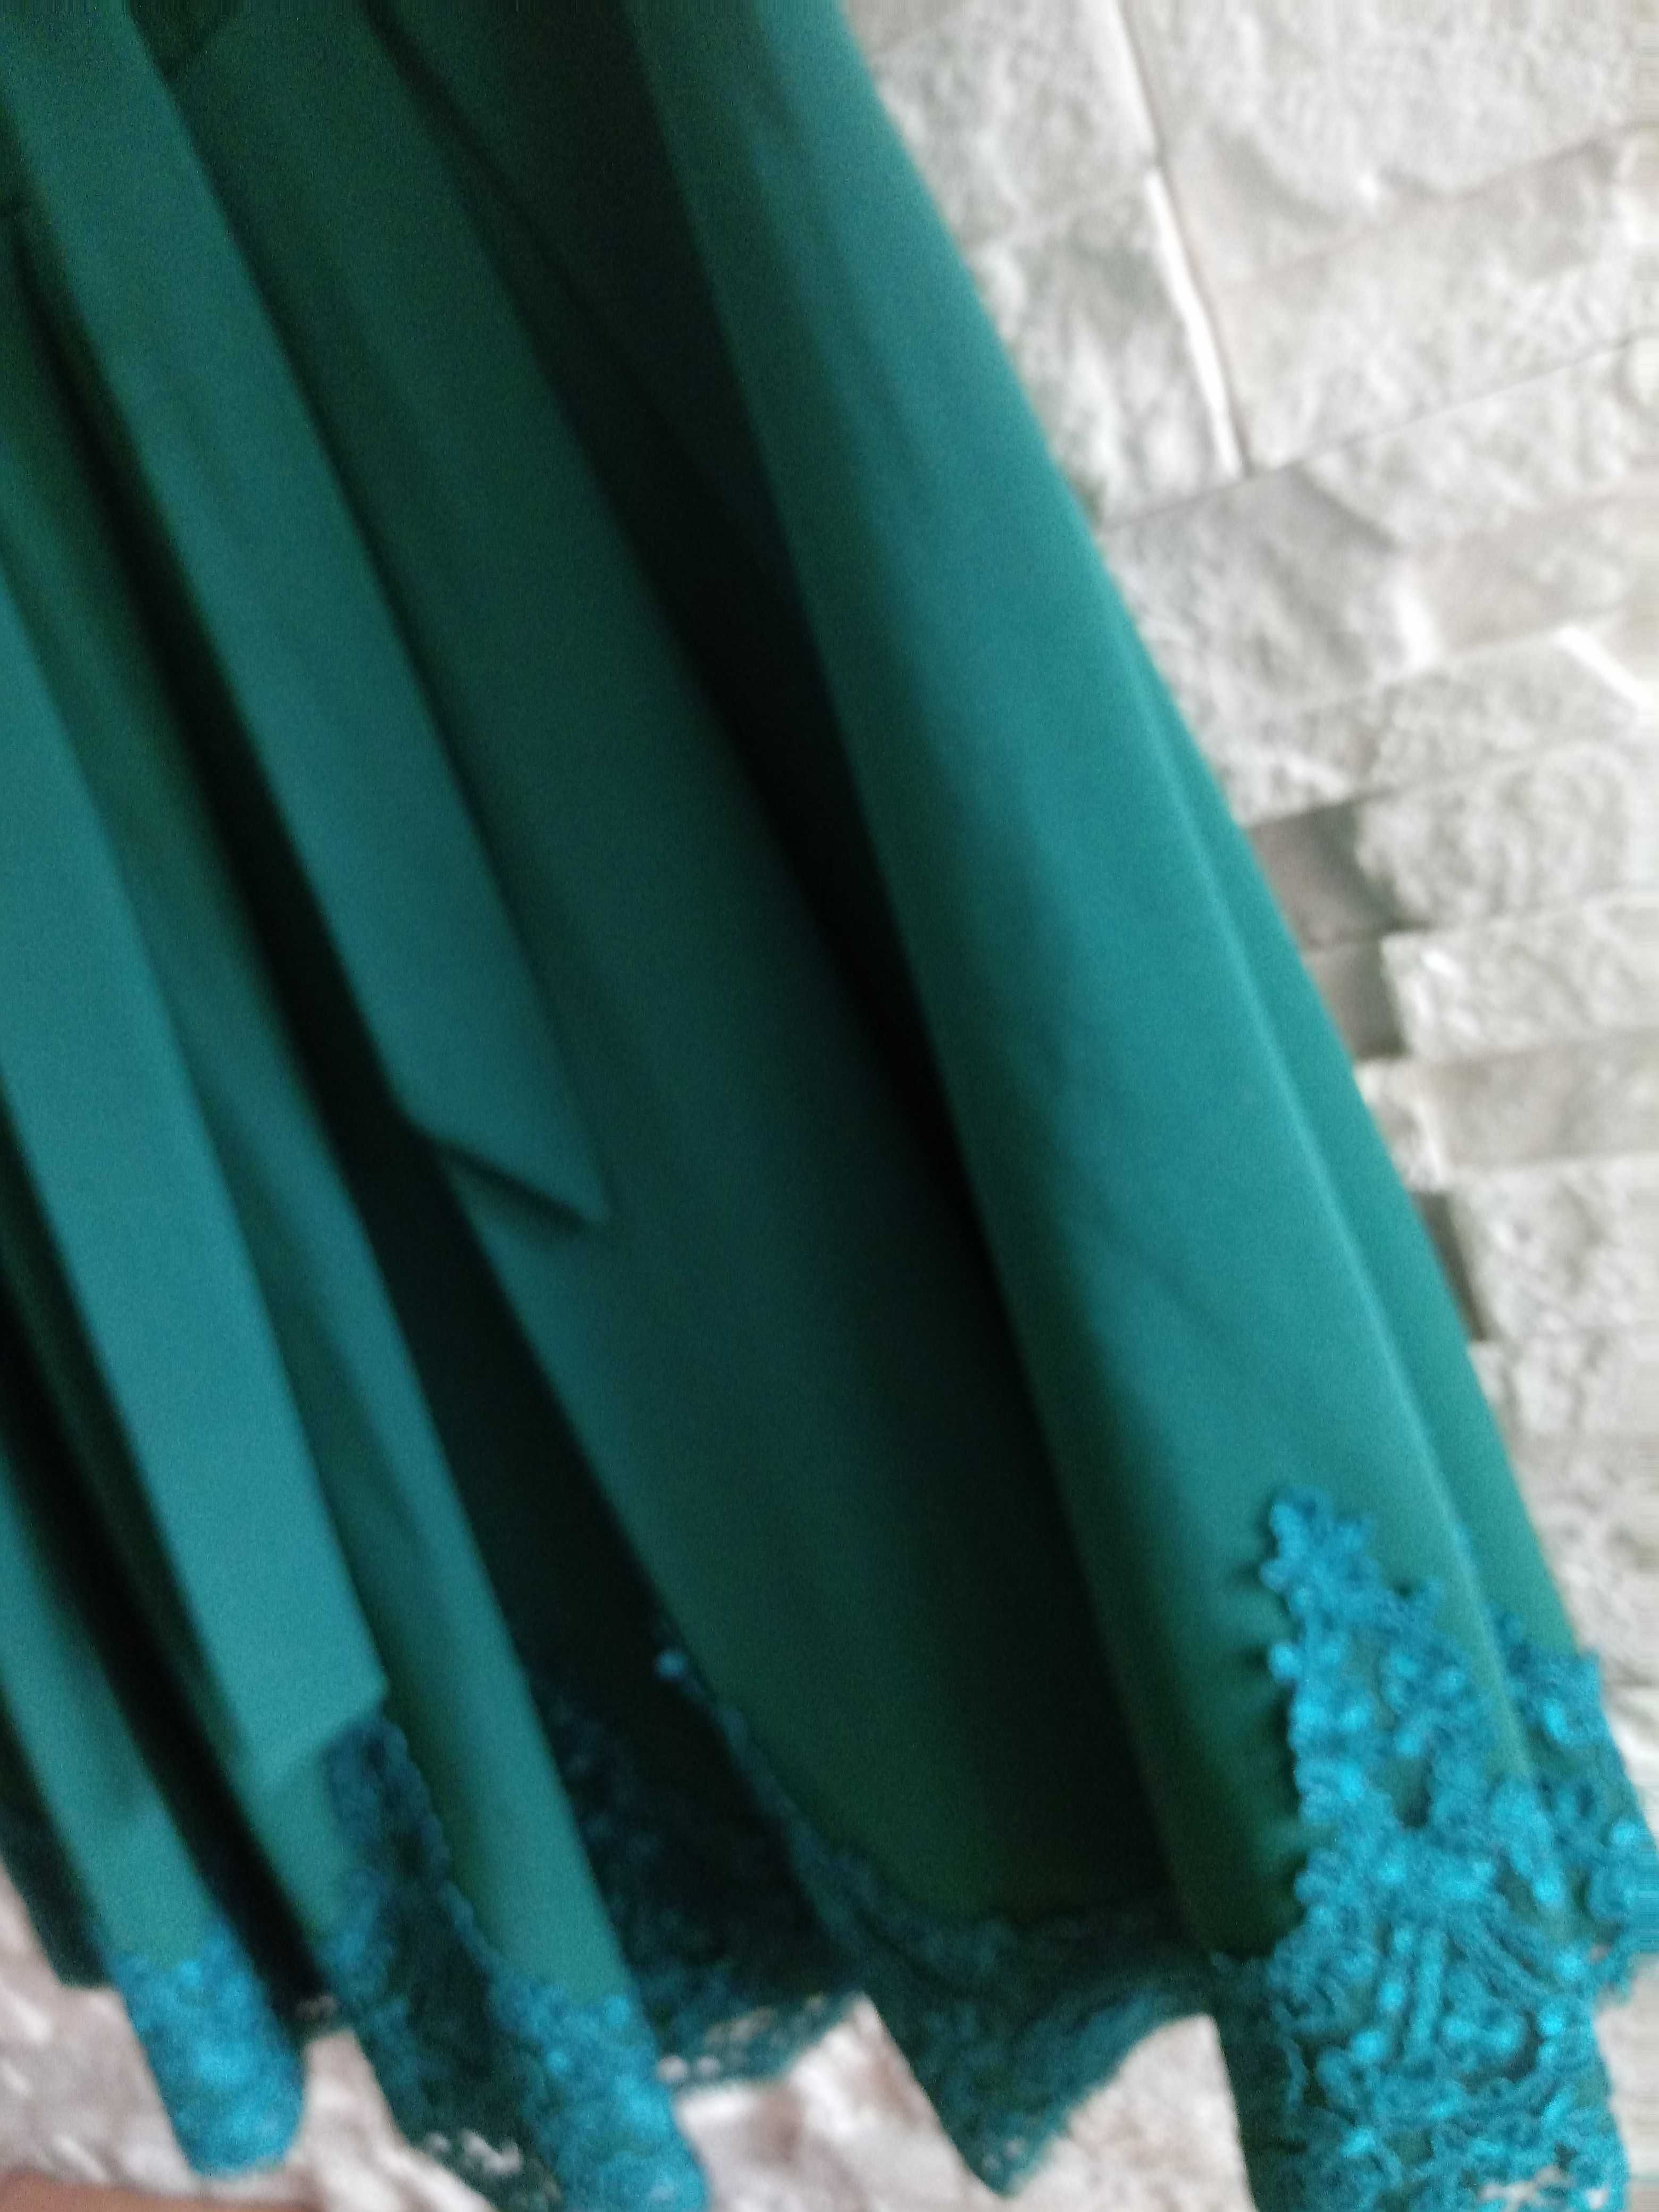 Sukienka butelkowa zieleń elegancka. 44/XL